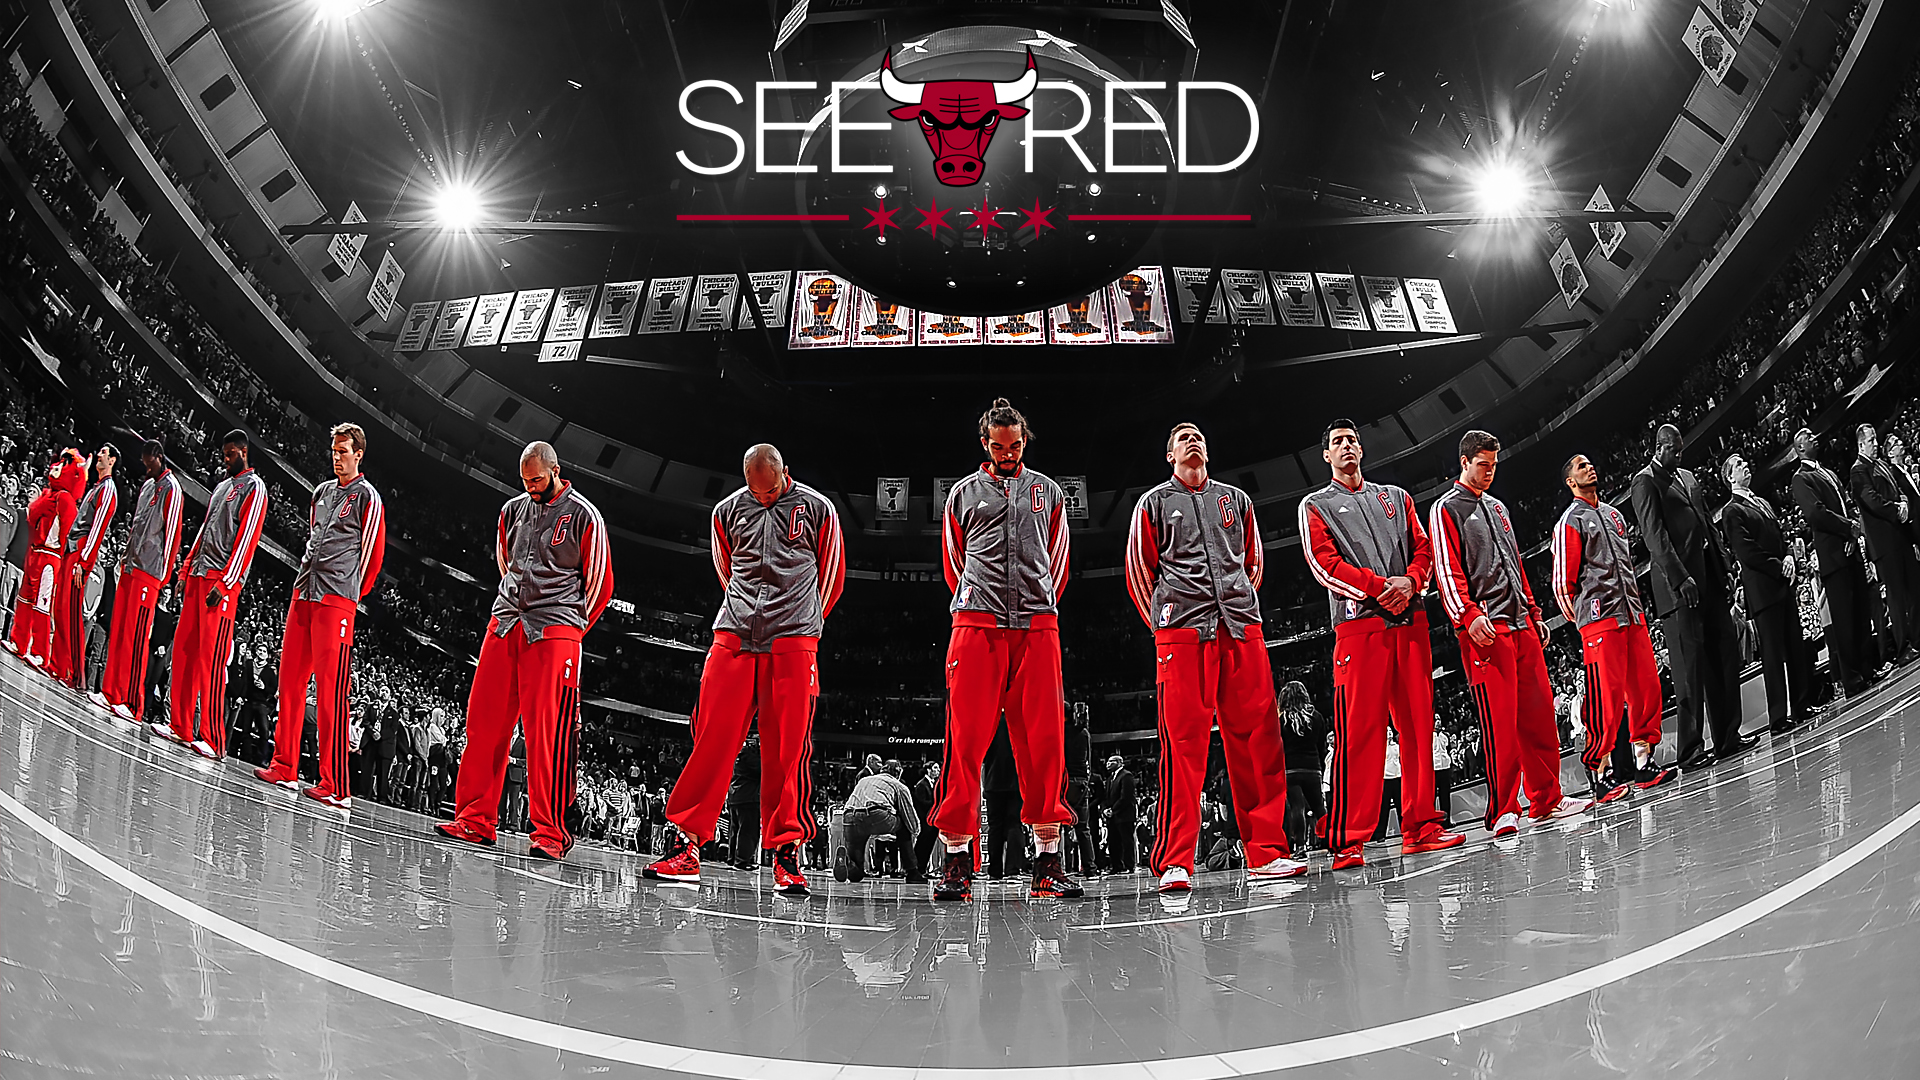 SEE RED Chicago Bulls Playoffs